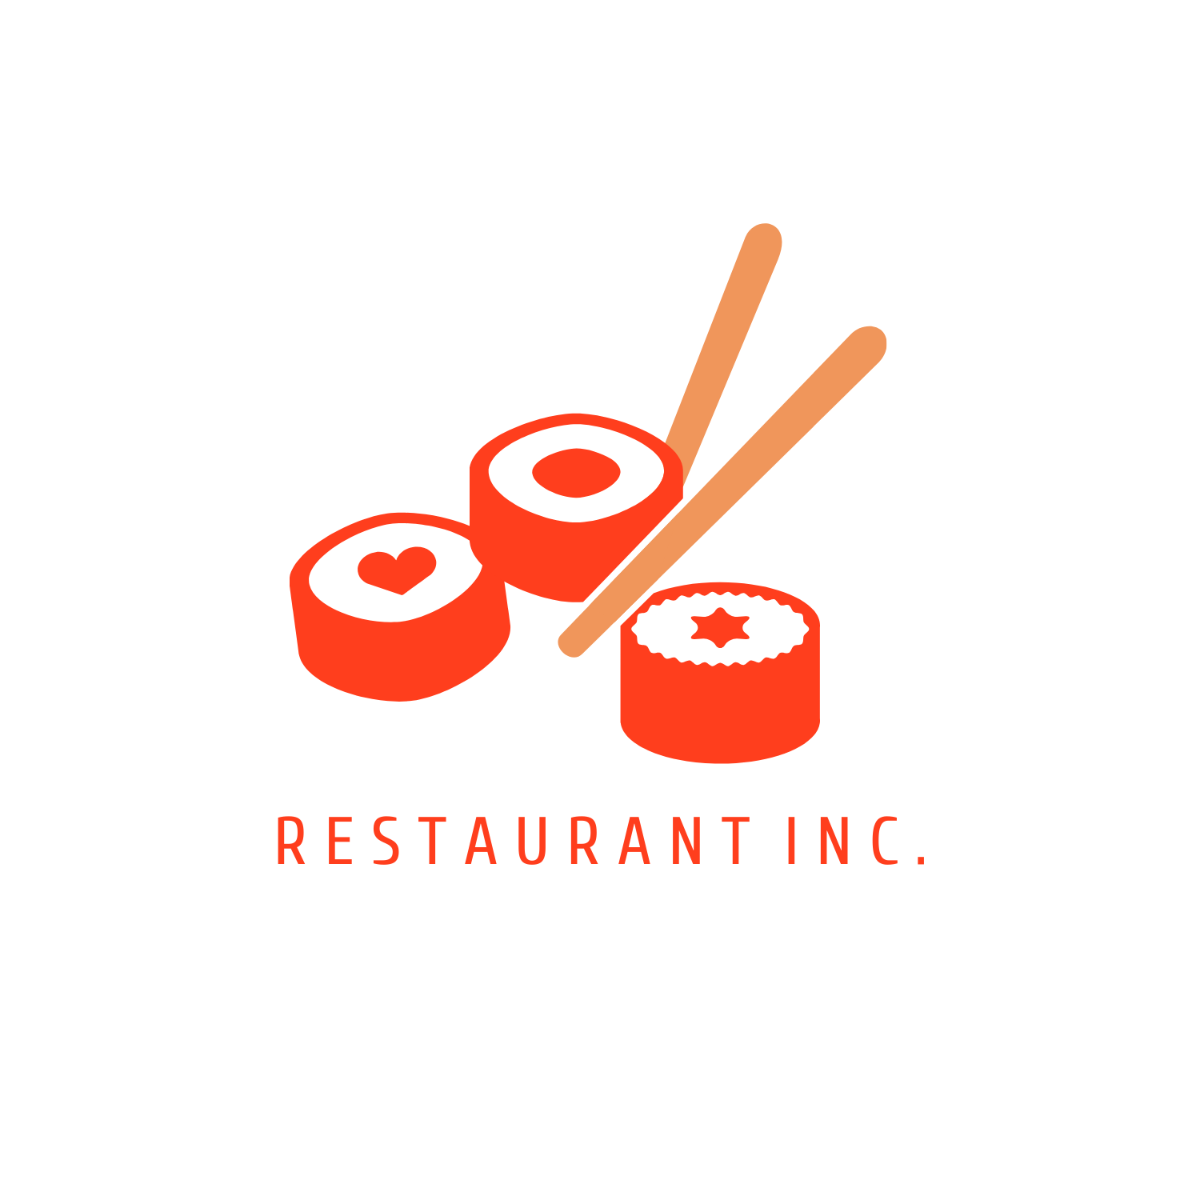 Sushi Restaurant Logo